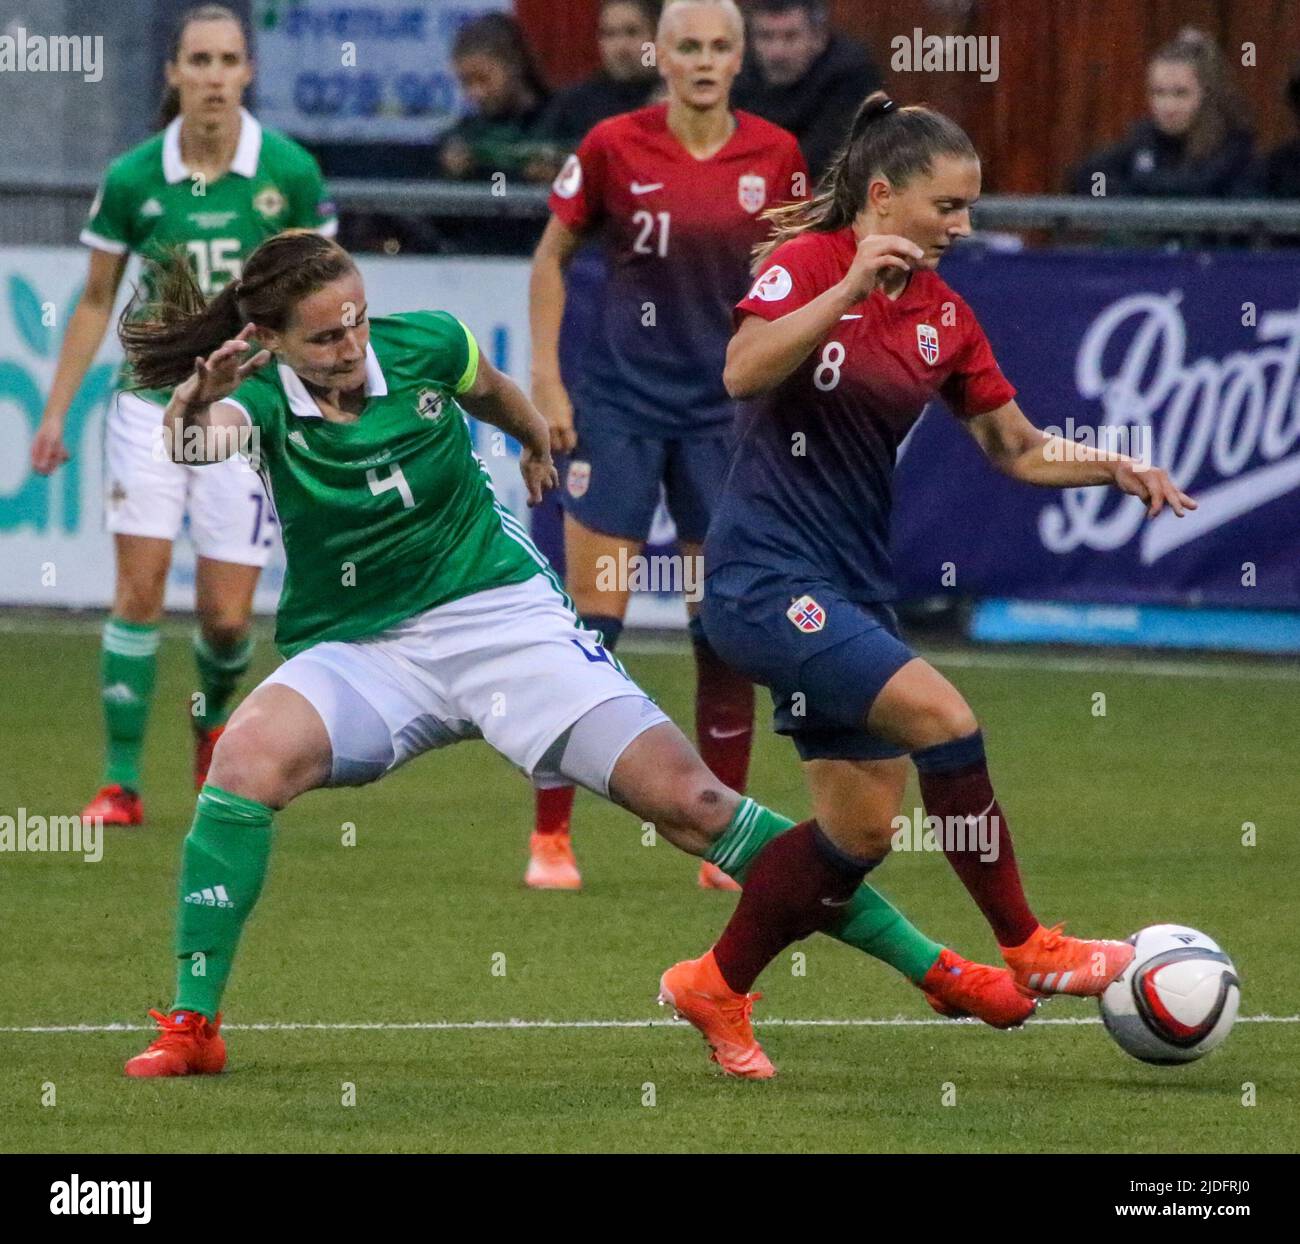 UEFA European Women's Championship 2021. 30 Aug 2019. Northern Ireland 0 Norway 6 at Seaview, Belfast. Norway Women's International football player Vilde Boe Risa Norway (8) . Stock Photo